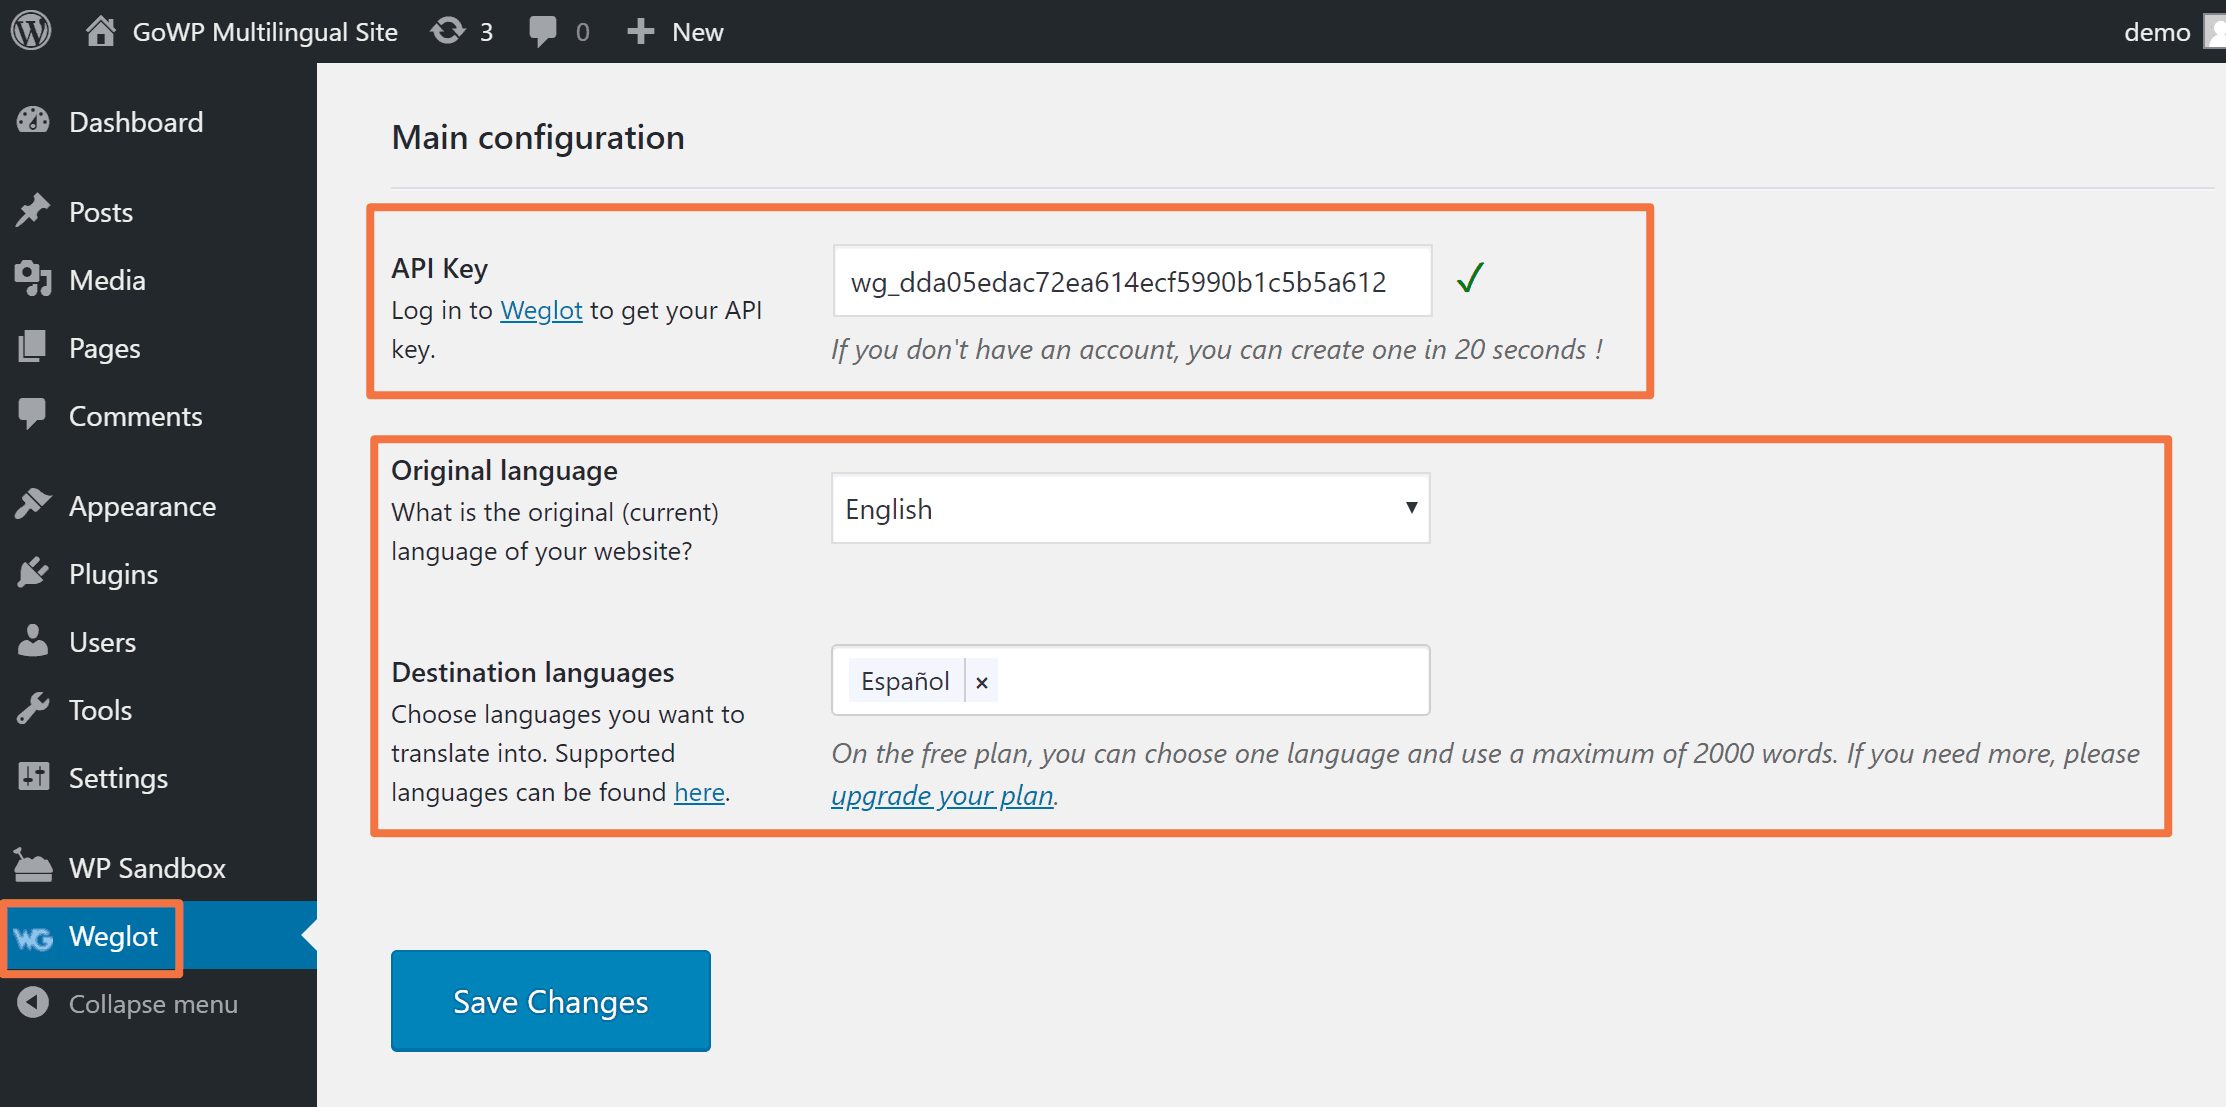 Configure "API Key", "Original language" and "Destination languages" settings